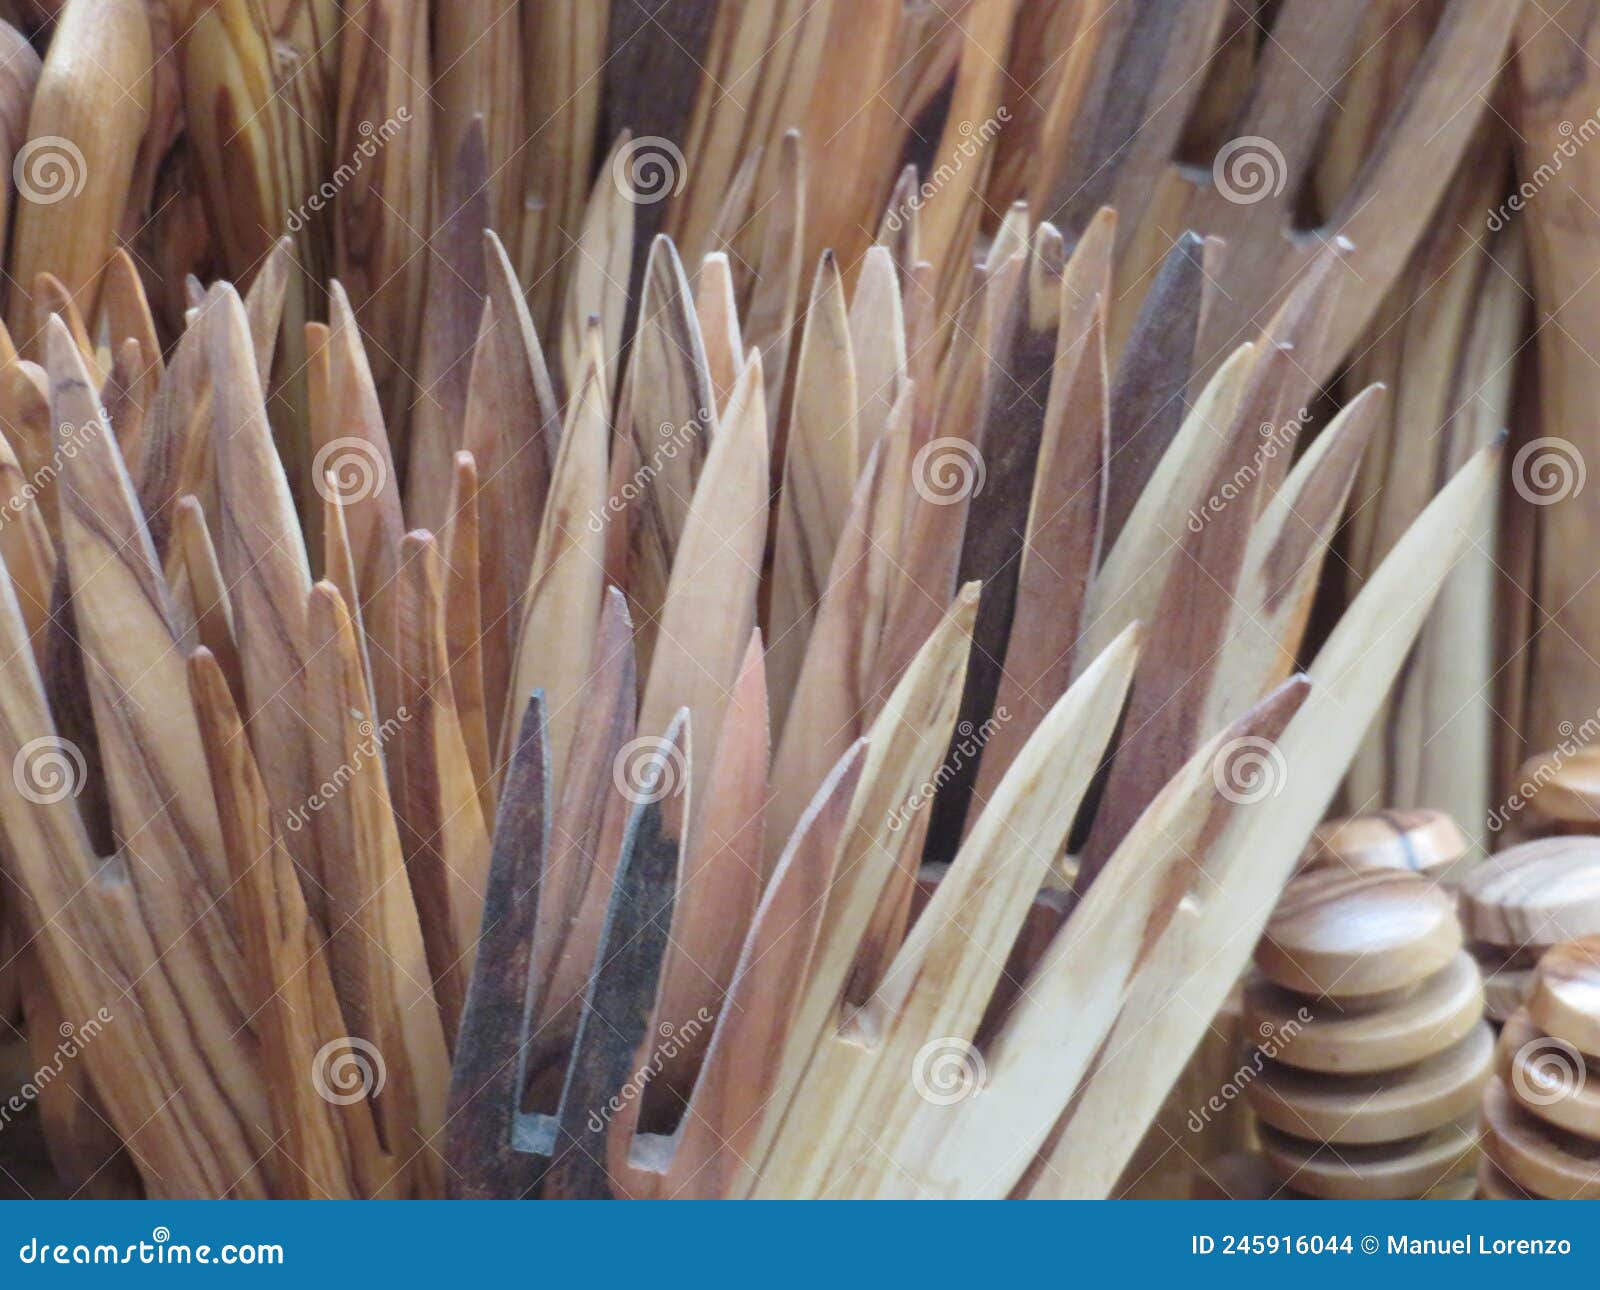 beautiful wooden forks kitchen utensils for preparing food